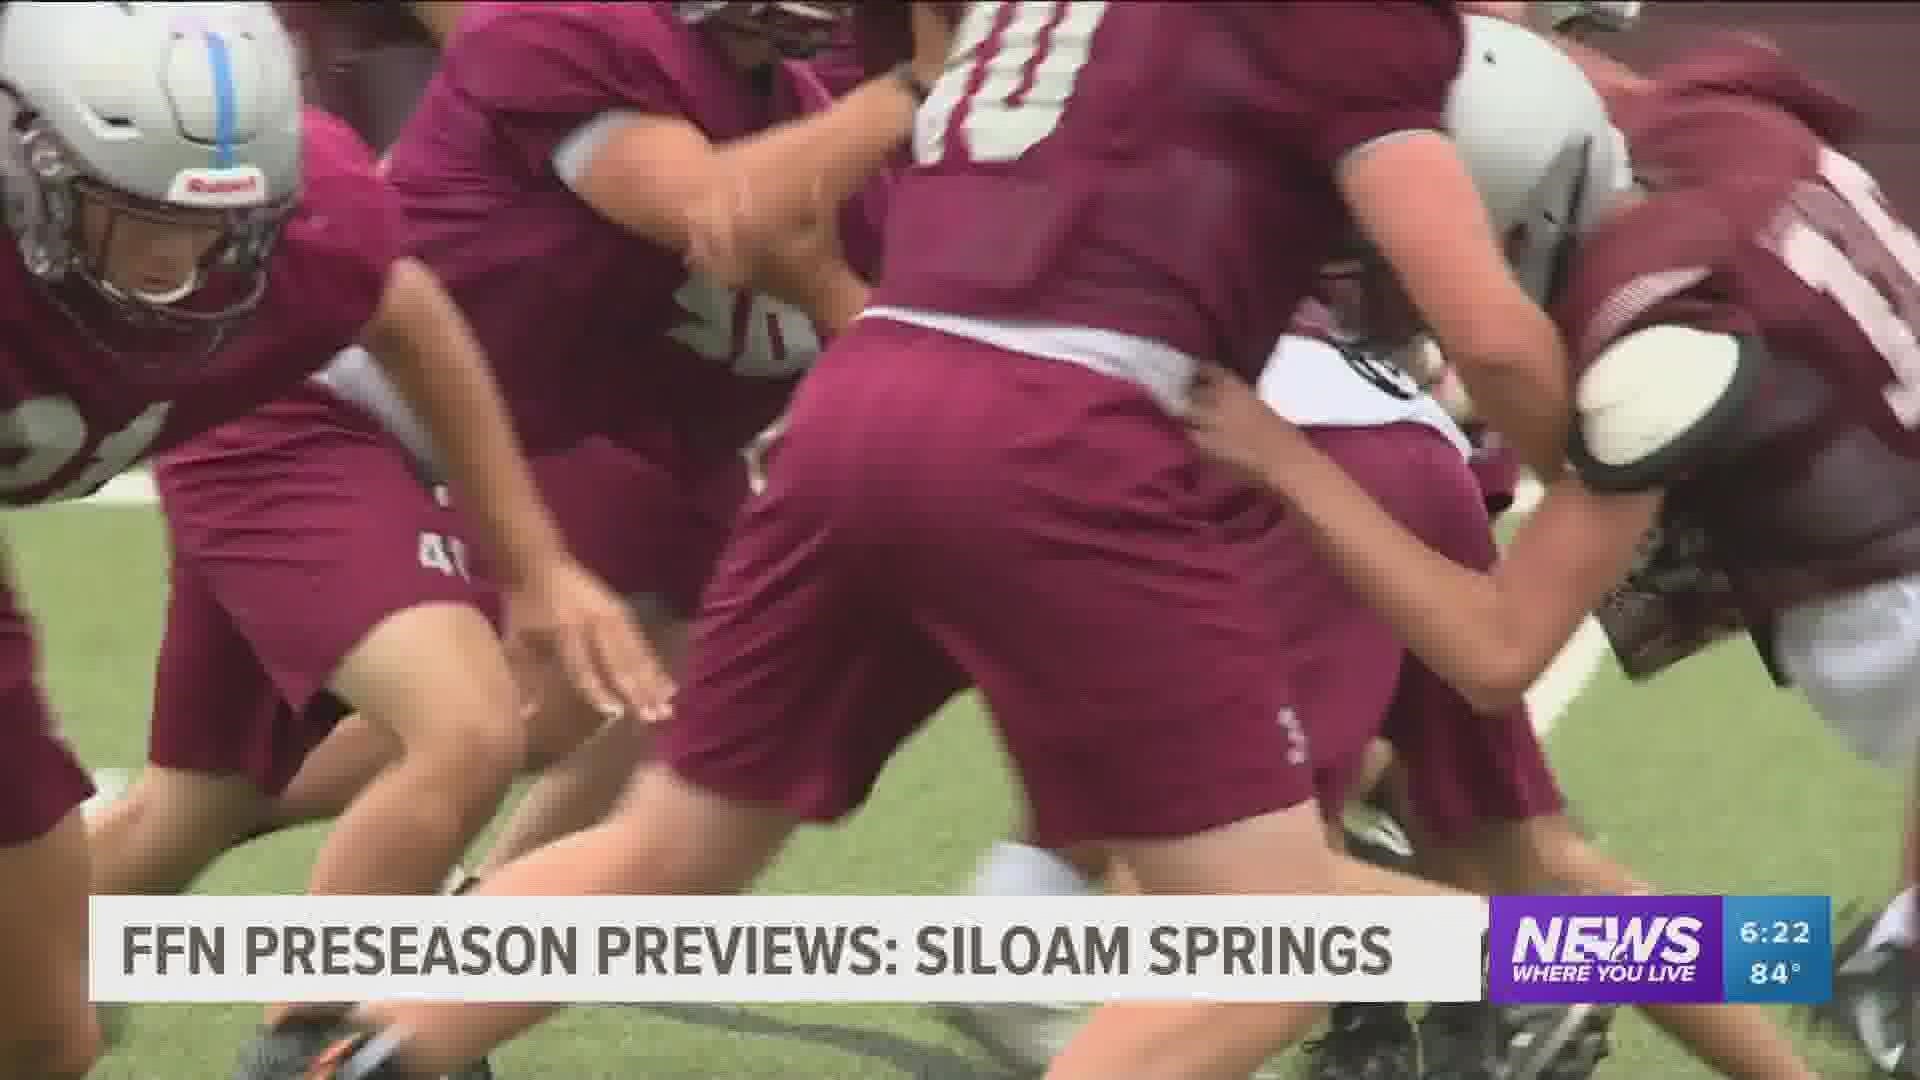 Siloam Springs FFN preview